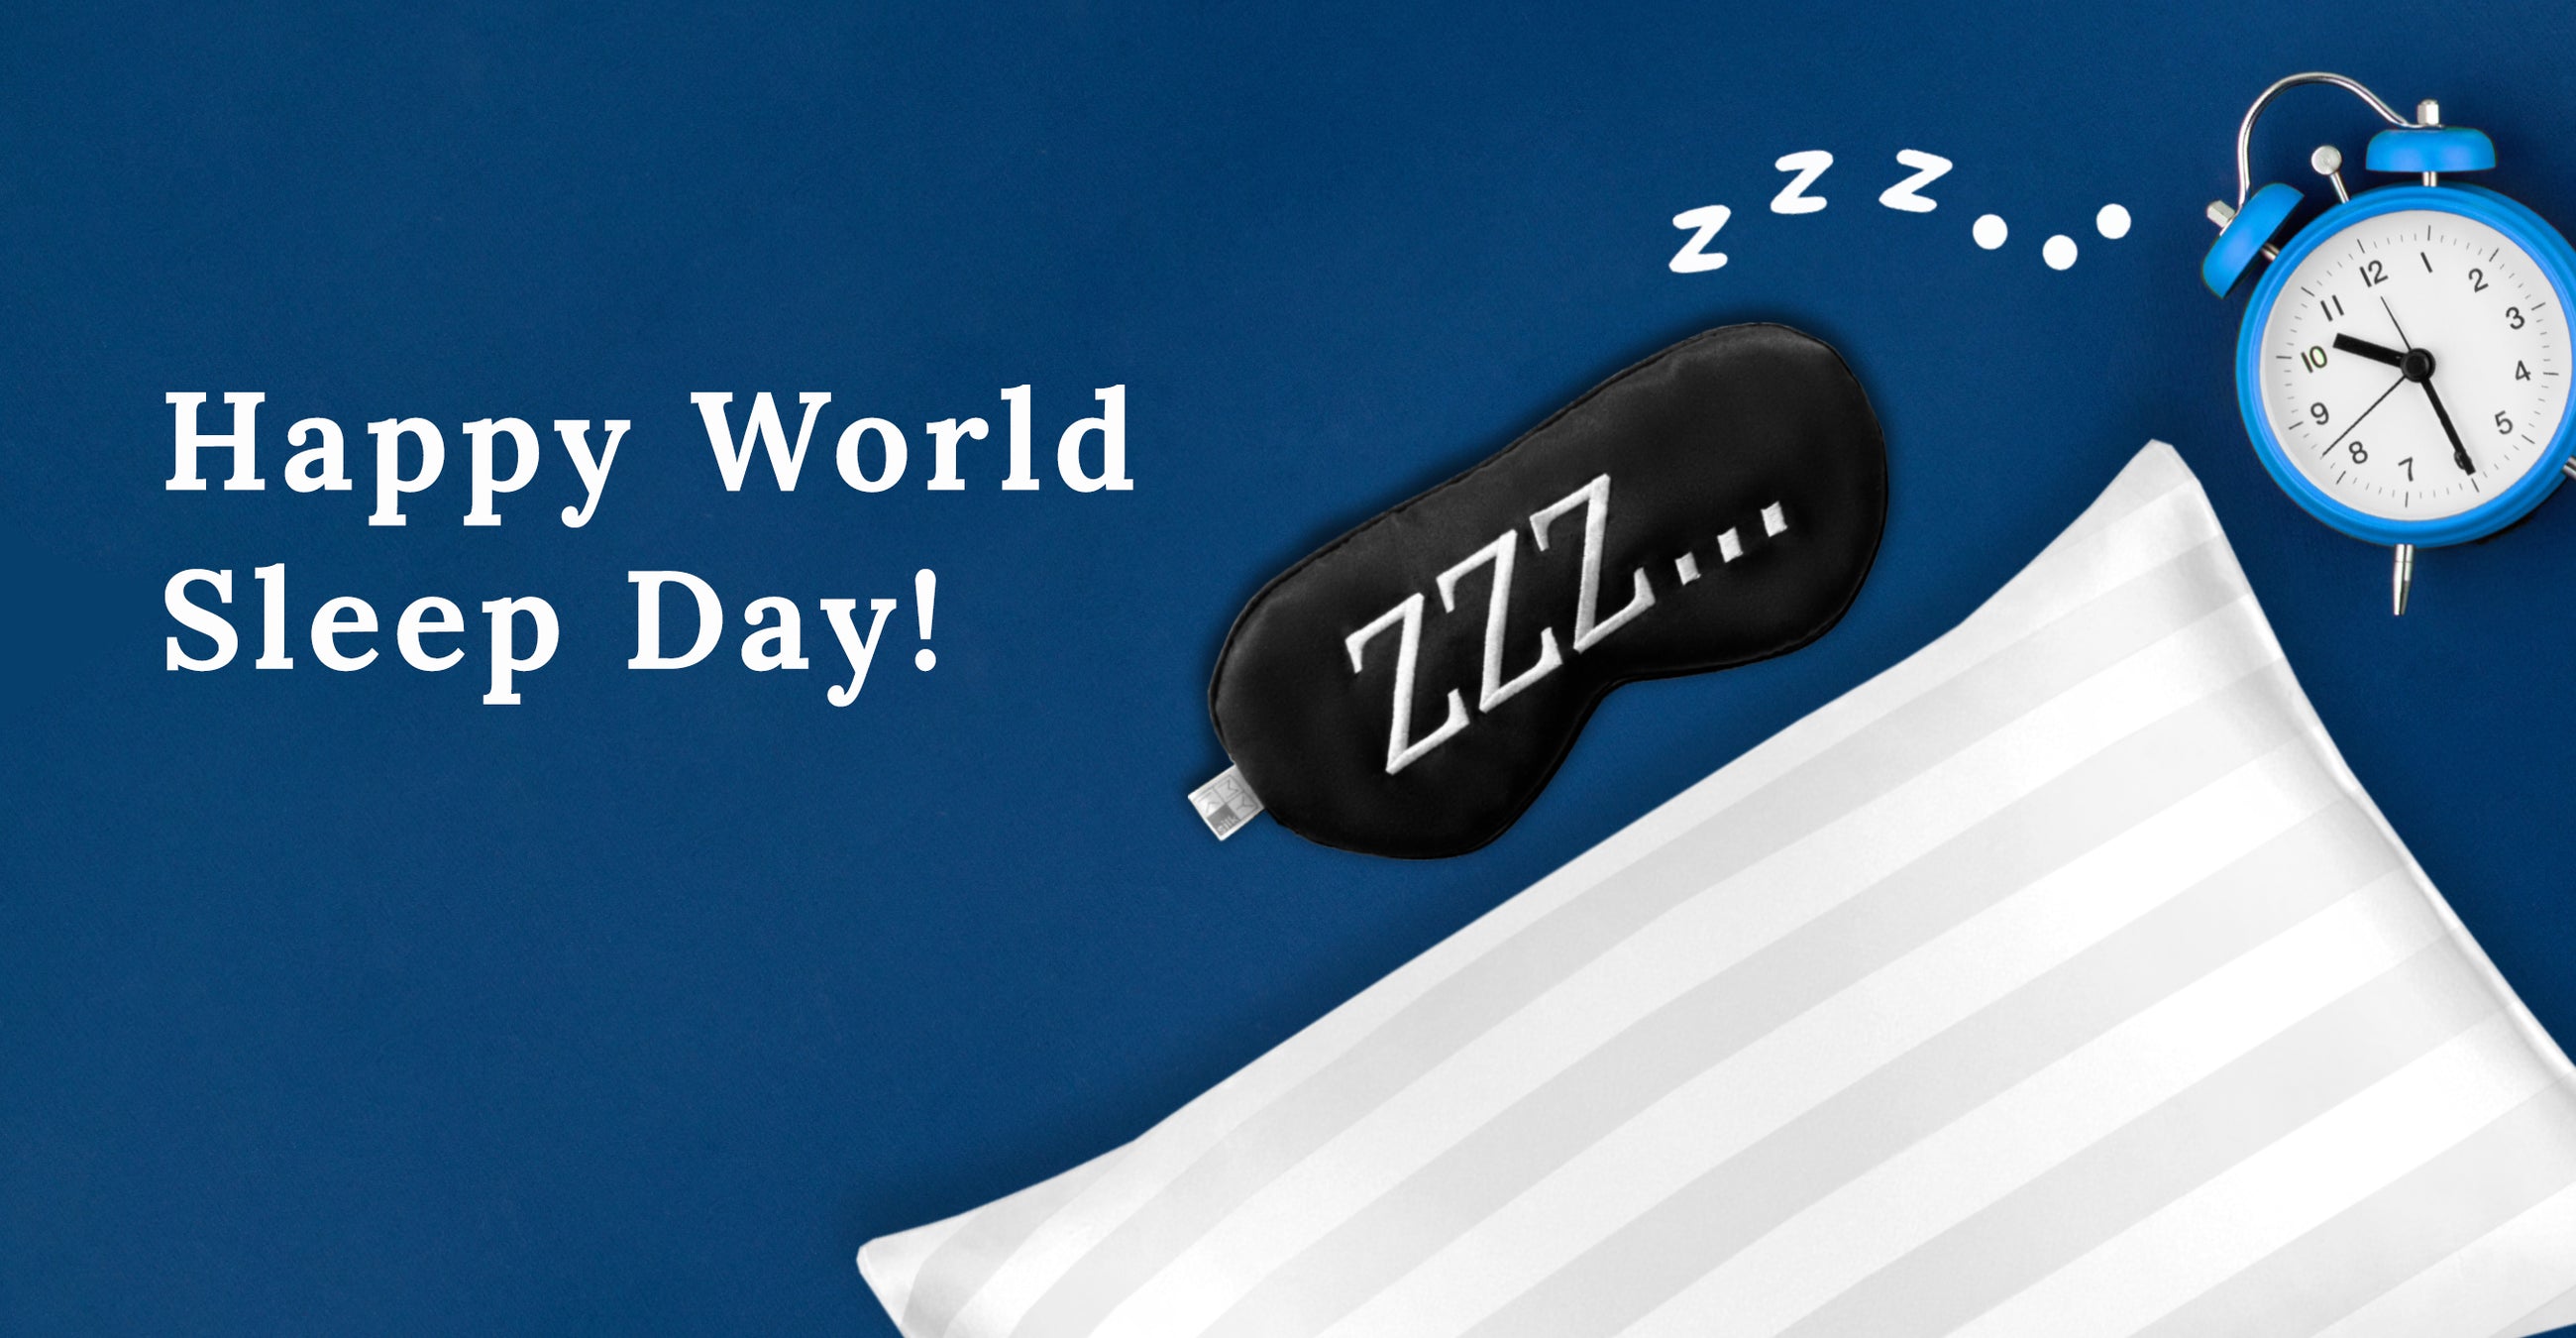 Happy World Sleep Day!